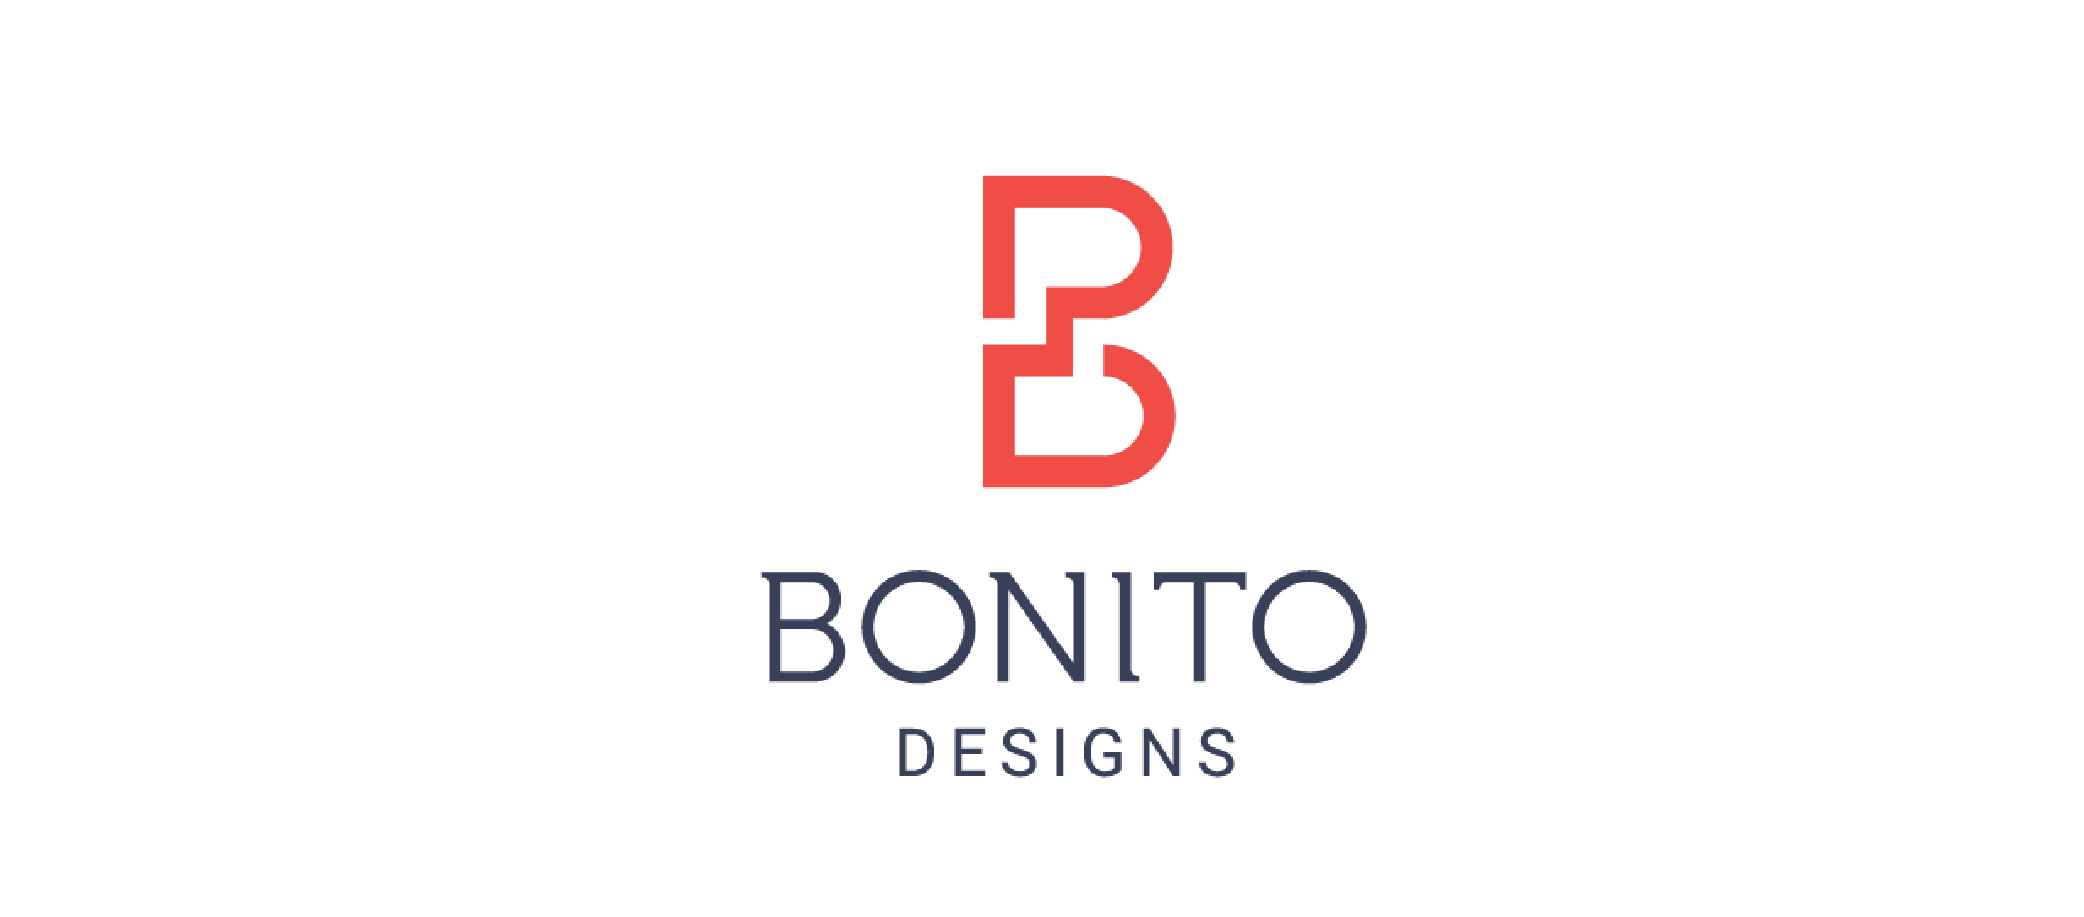 Bonito - Client - DesignPro Digital Agency In Gulbarga